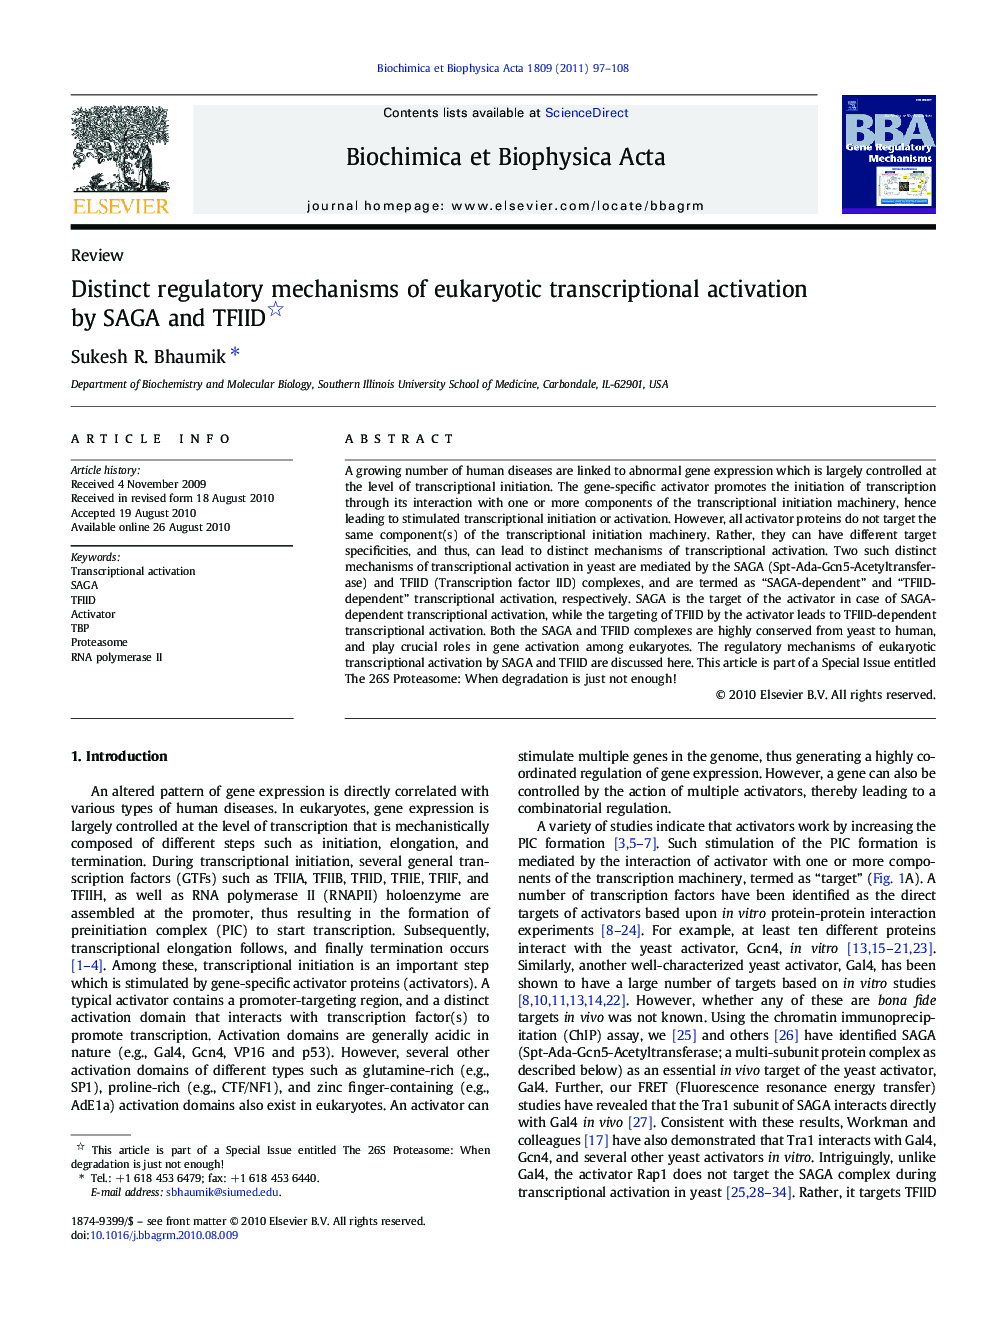 Distinct regulatory mechanisms of eukaryotic transcriptional activation by SAGA and TFIID 